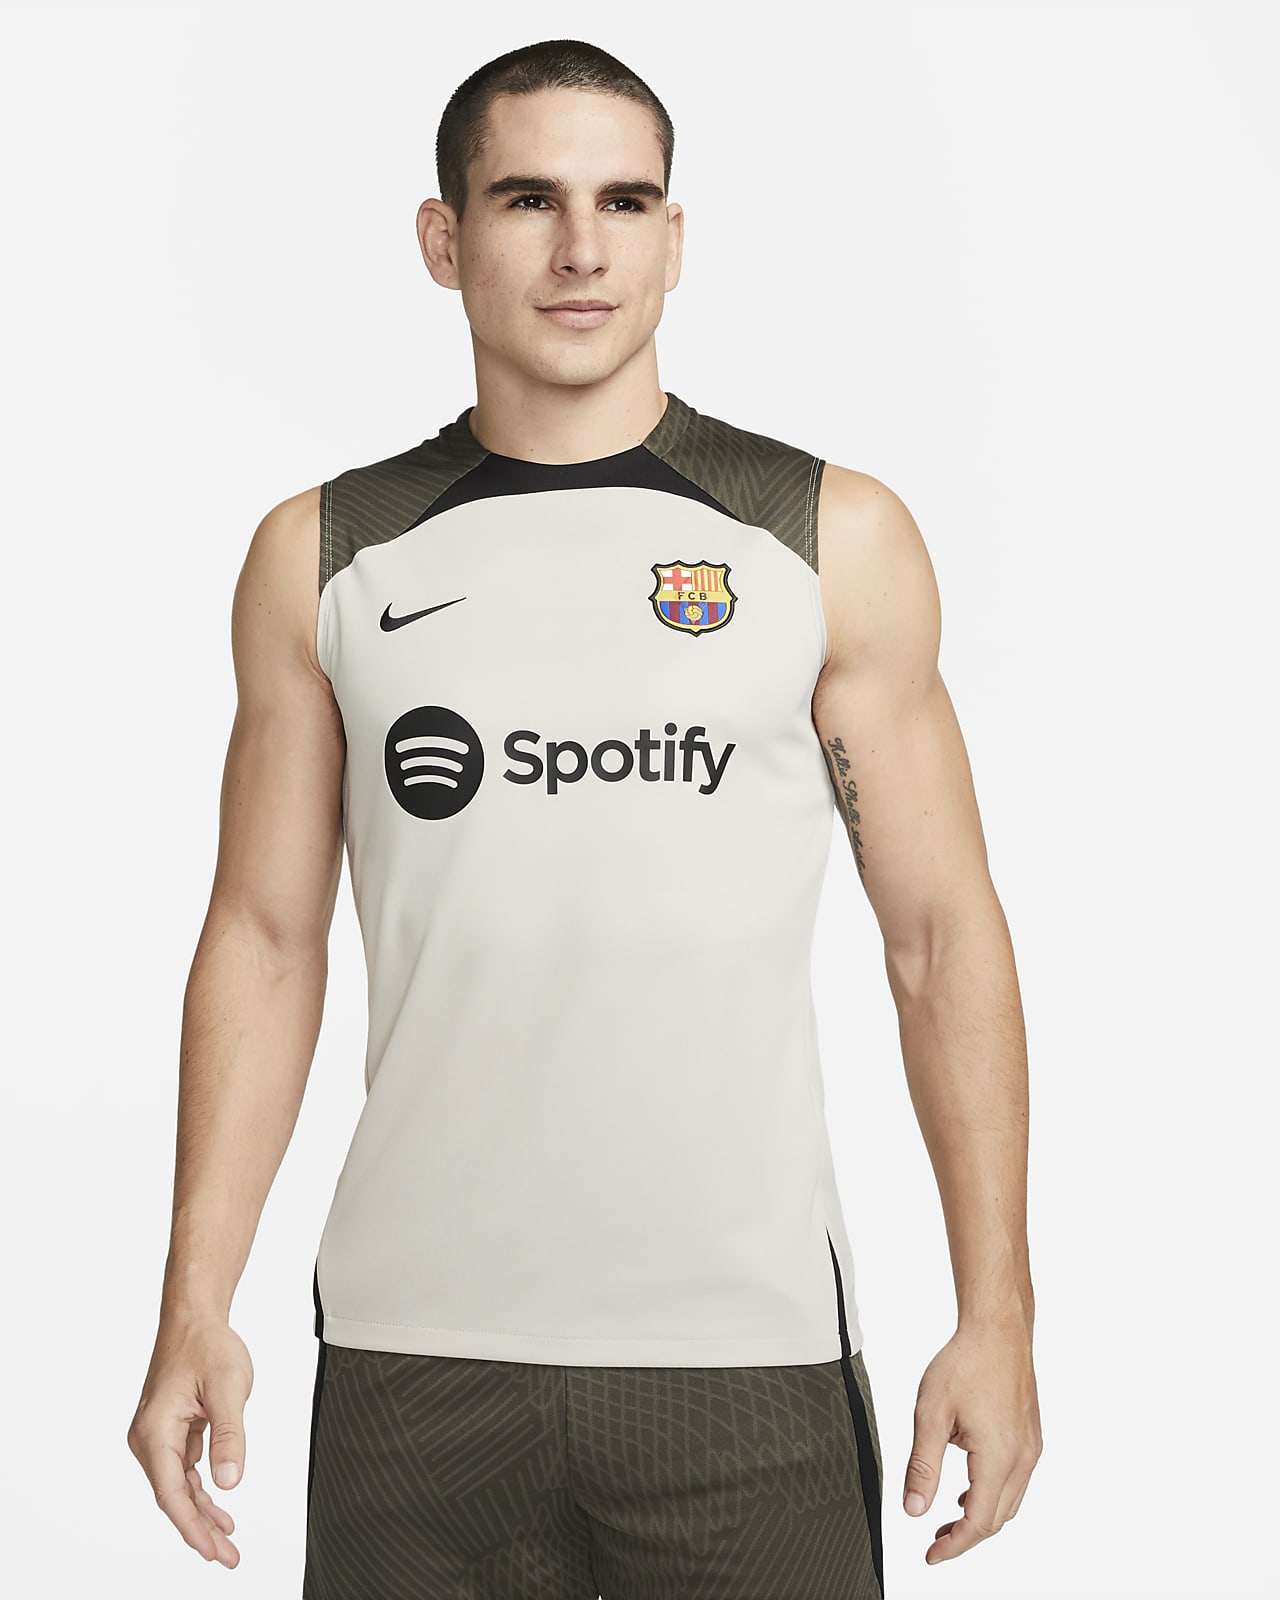 FC Barcelona Strike Men's Nike Dri-FIT Sleeveless Knit Soccer Top.